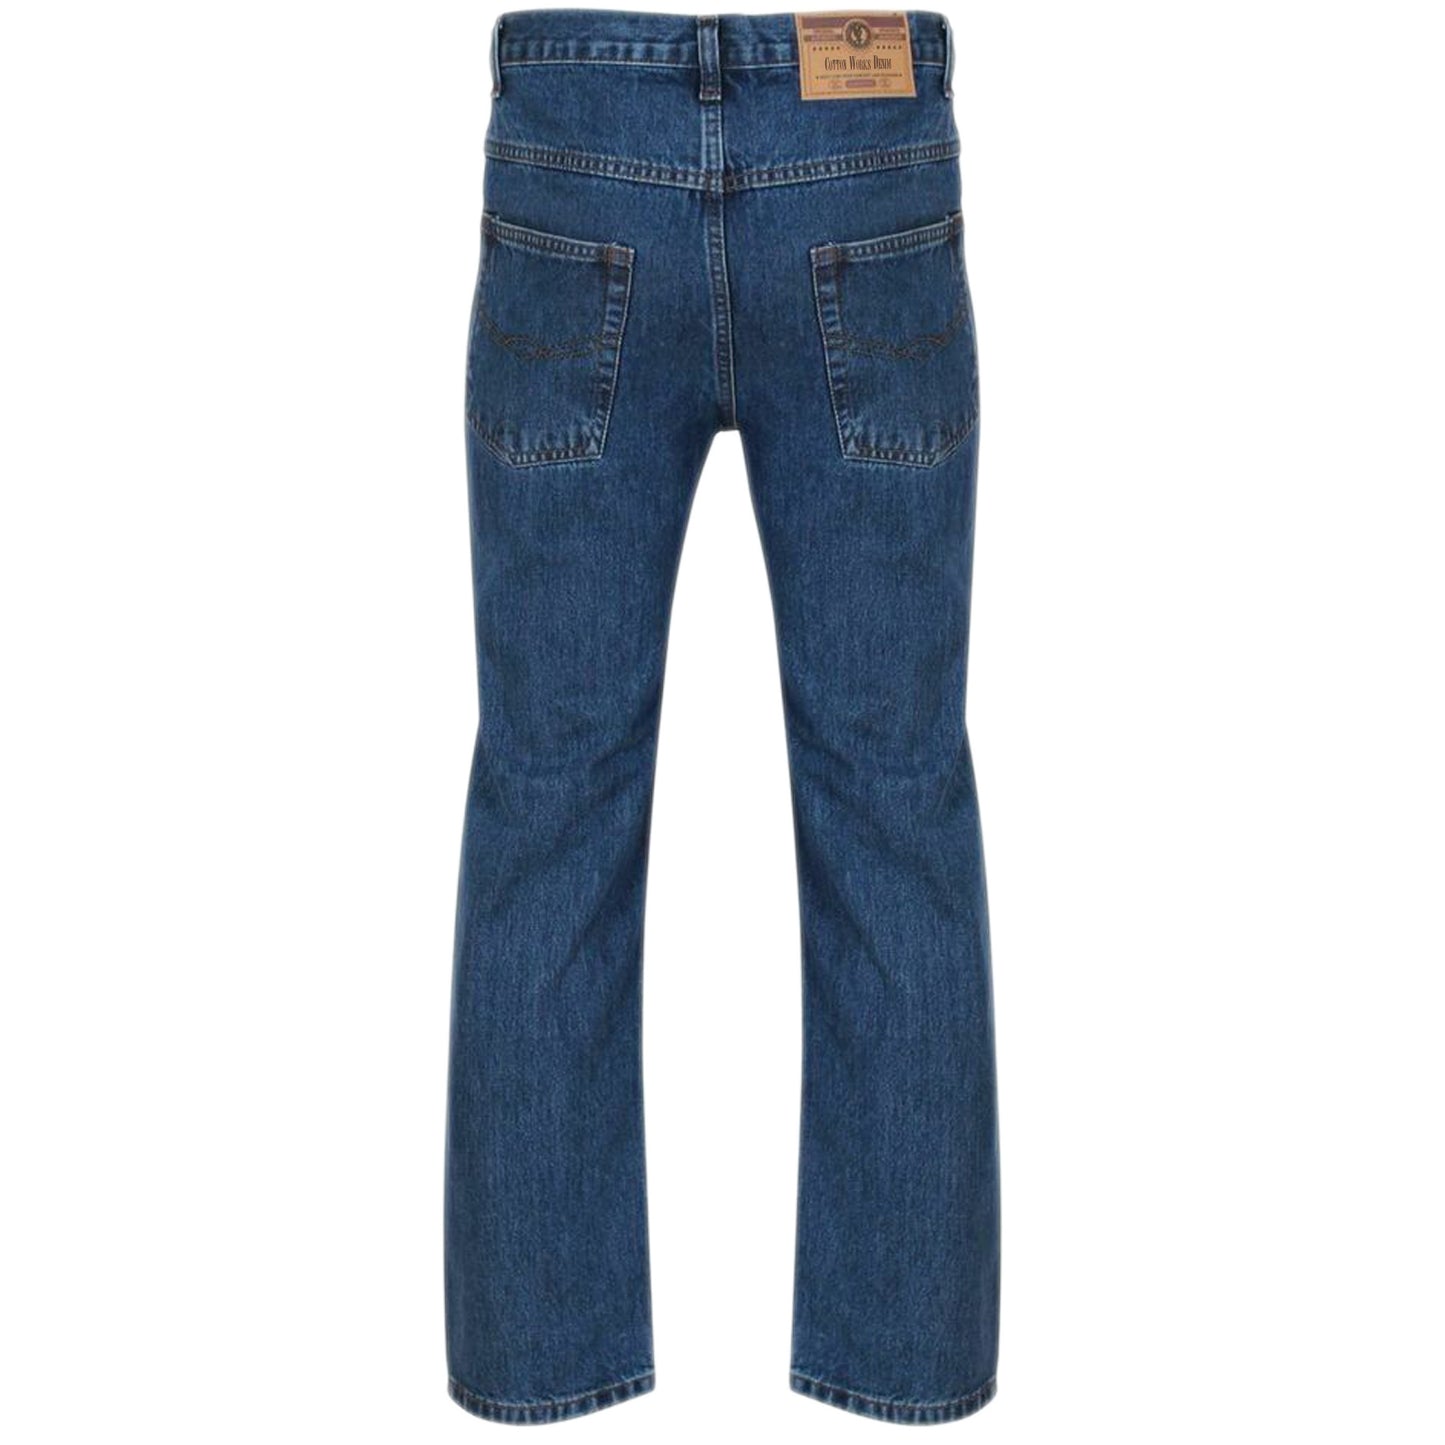 Mens Original Cotton Jeans Basic Plain Straight Leg Heavy Duty Denim Wash Jean Classic Designer Fit Casual Work Wear Zip Fly Belt Loop Pants Pocket Trousers